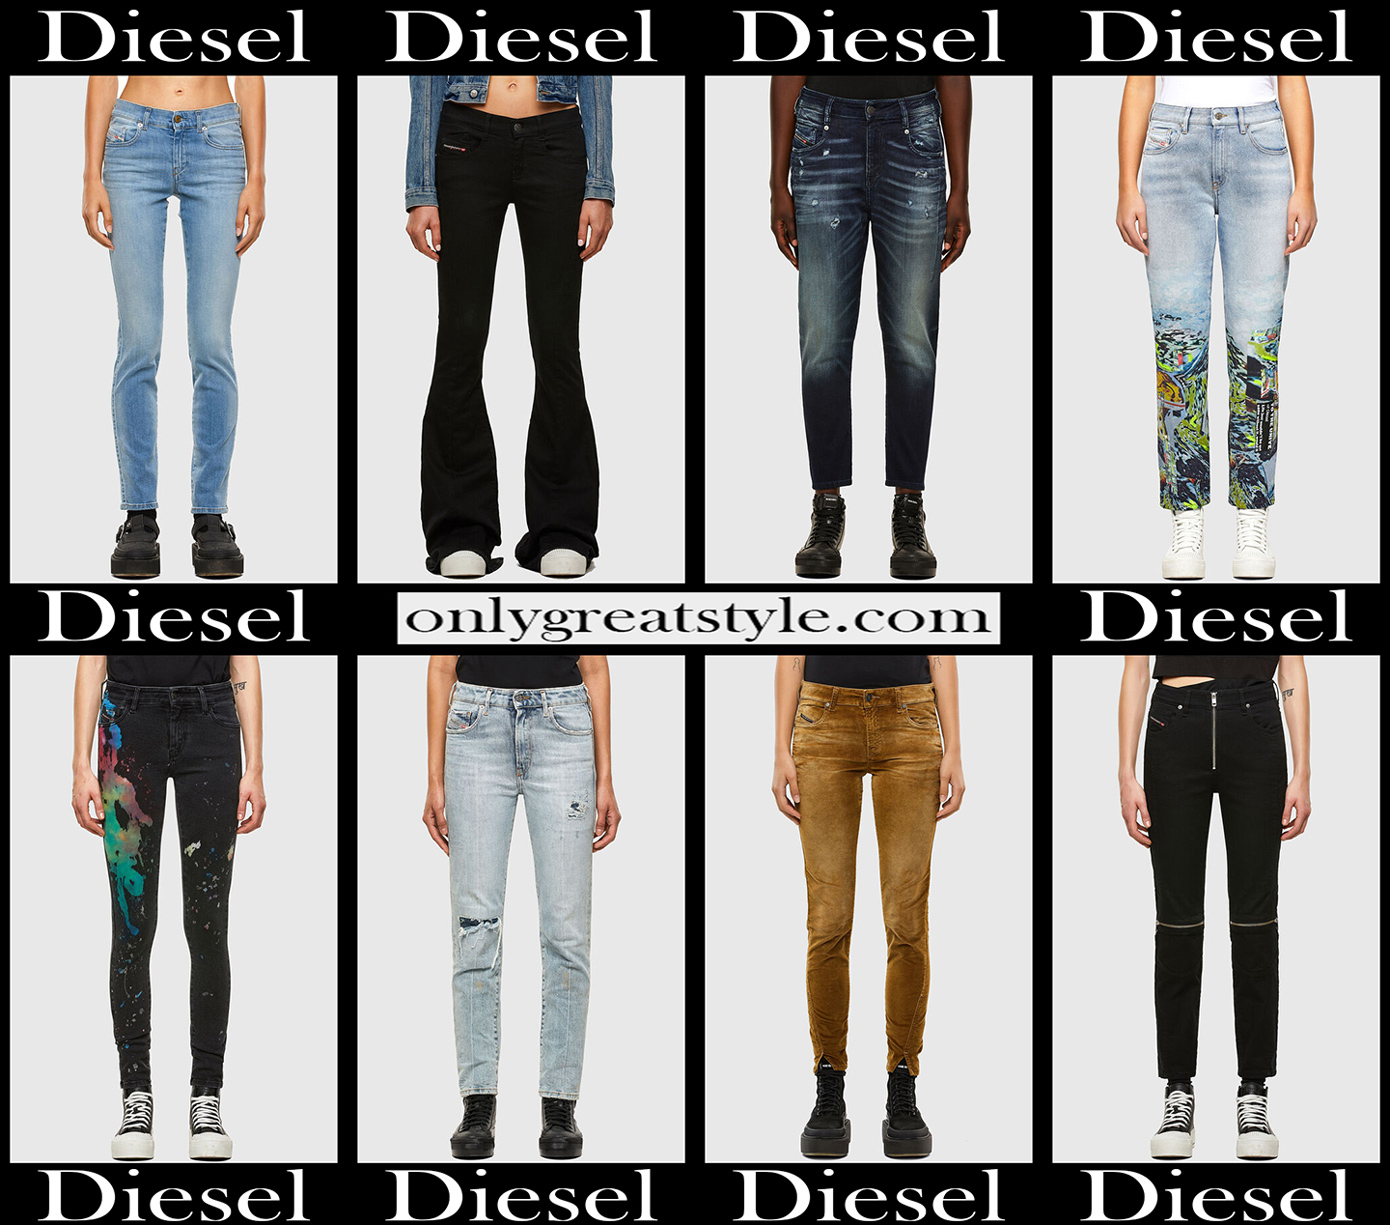 Diesel jeans 2021 new arrivals womens clothing denim